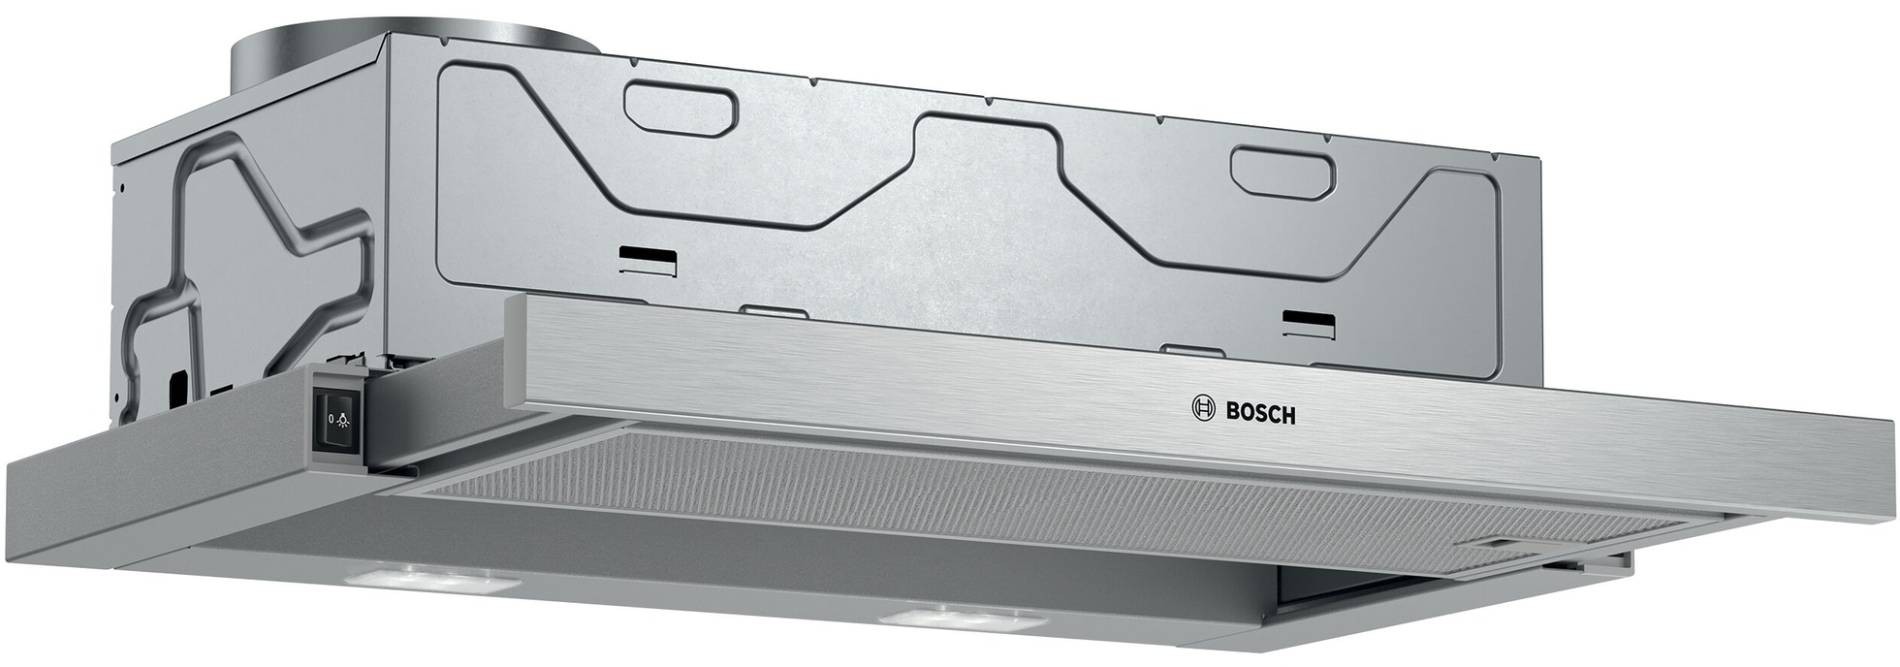 BOSCH Hotte tiroir Série 2 67dB 60cm Inox  DFM064W54